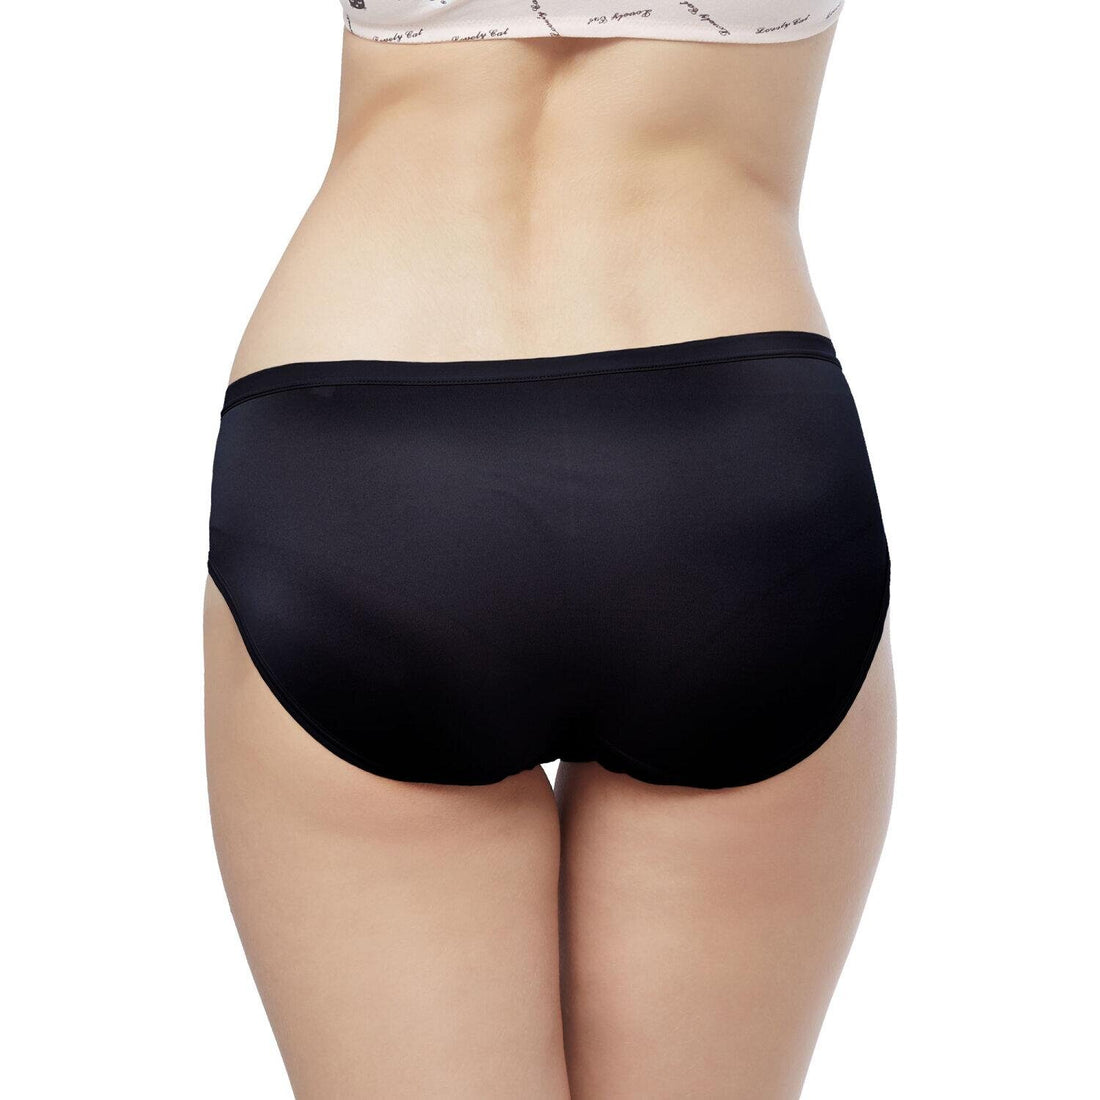 Wacoal Panty pack, comfortable underwear Bikini pattern set 3 pieces, model WU1T34, assorted colors (beige-black-cream)